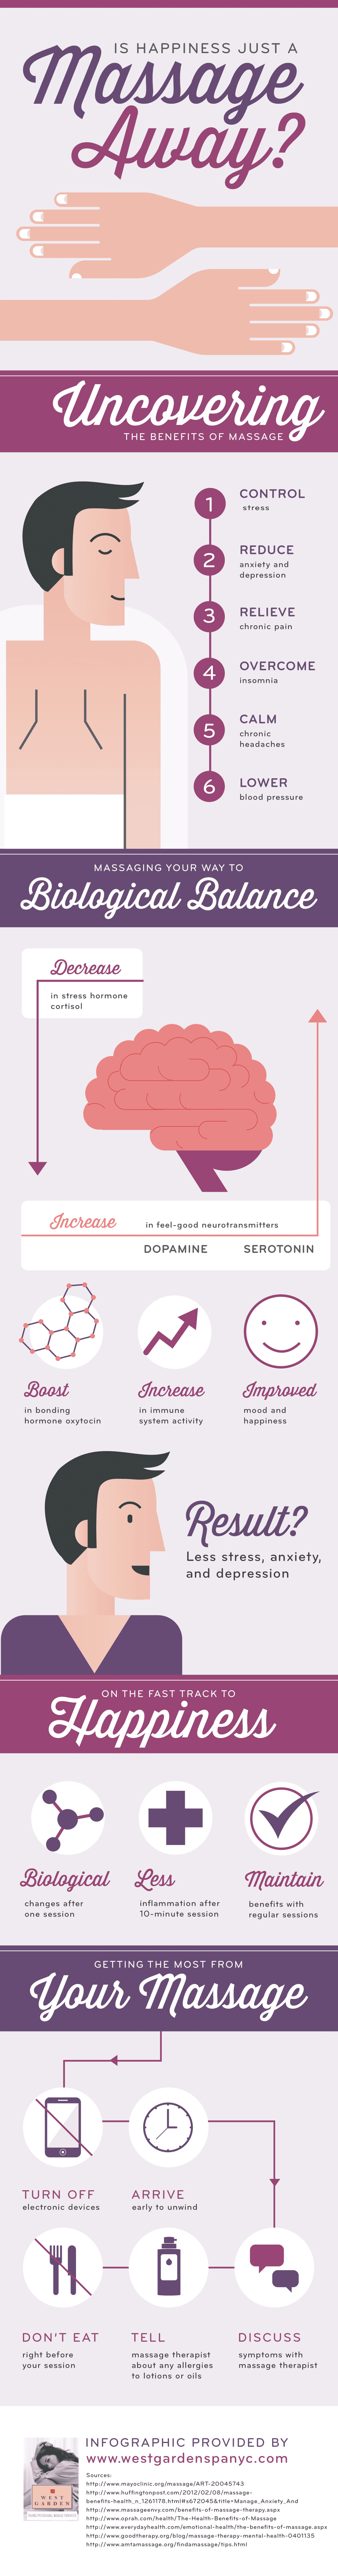 Benefits of a Massage